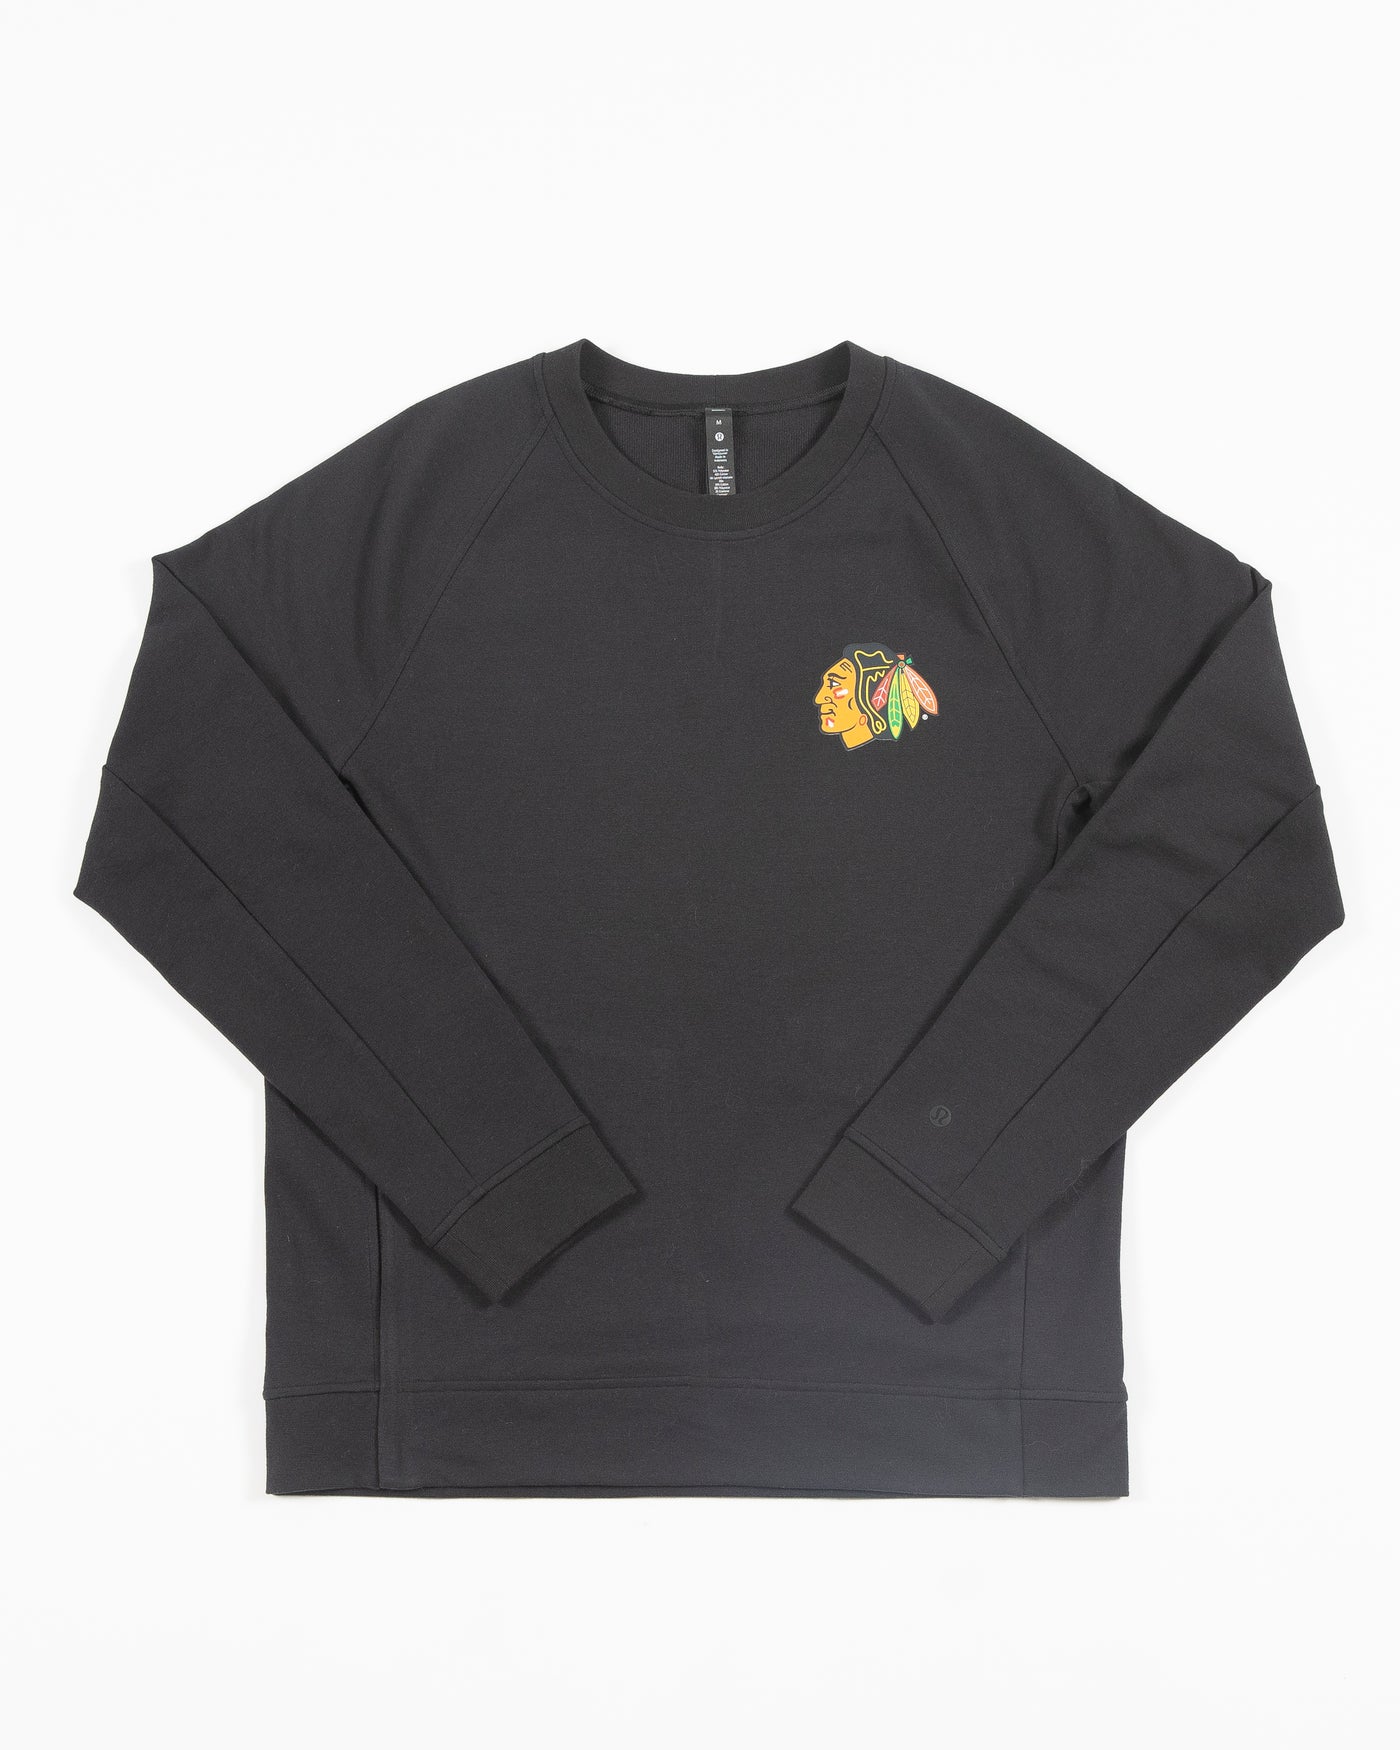 black lululemon crewneck sweater with Chicago Blackhawks primary logo on left chest - front lay flat